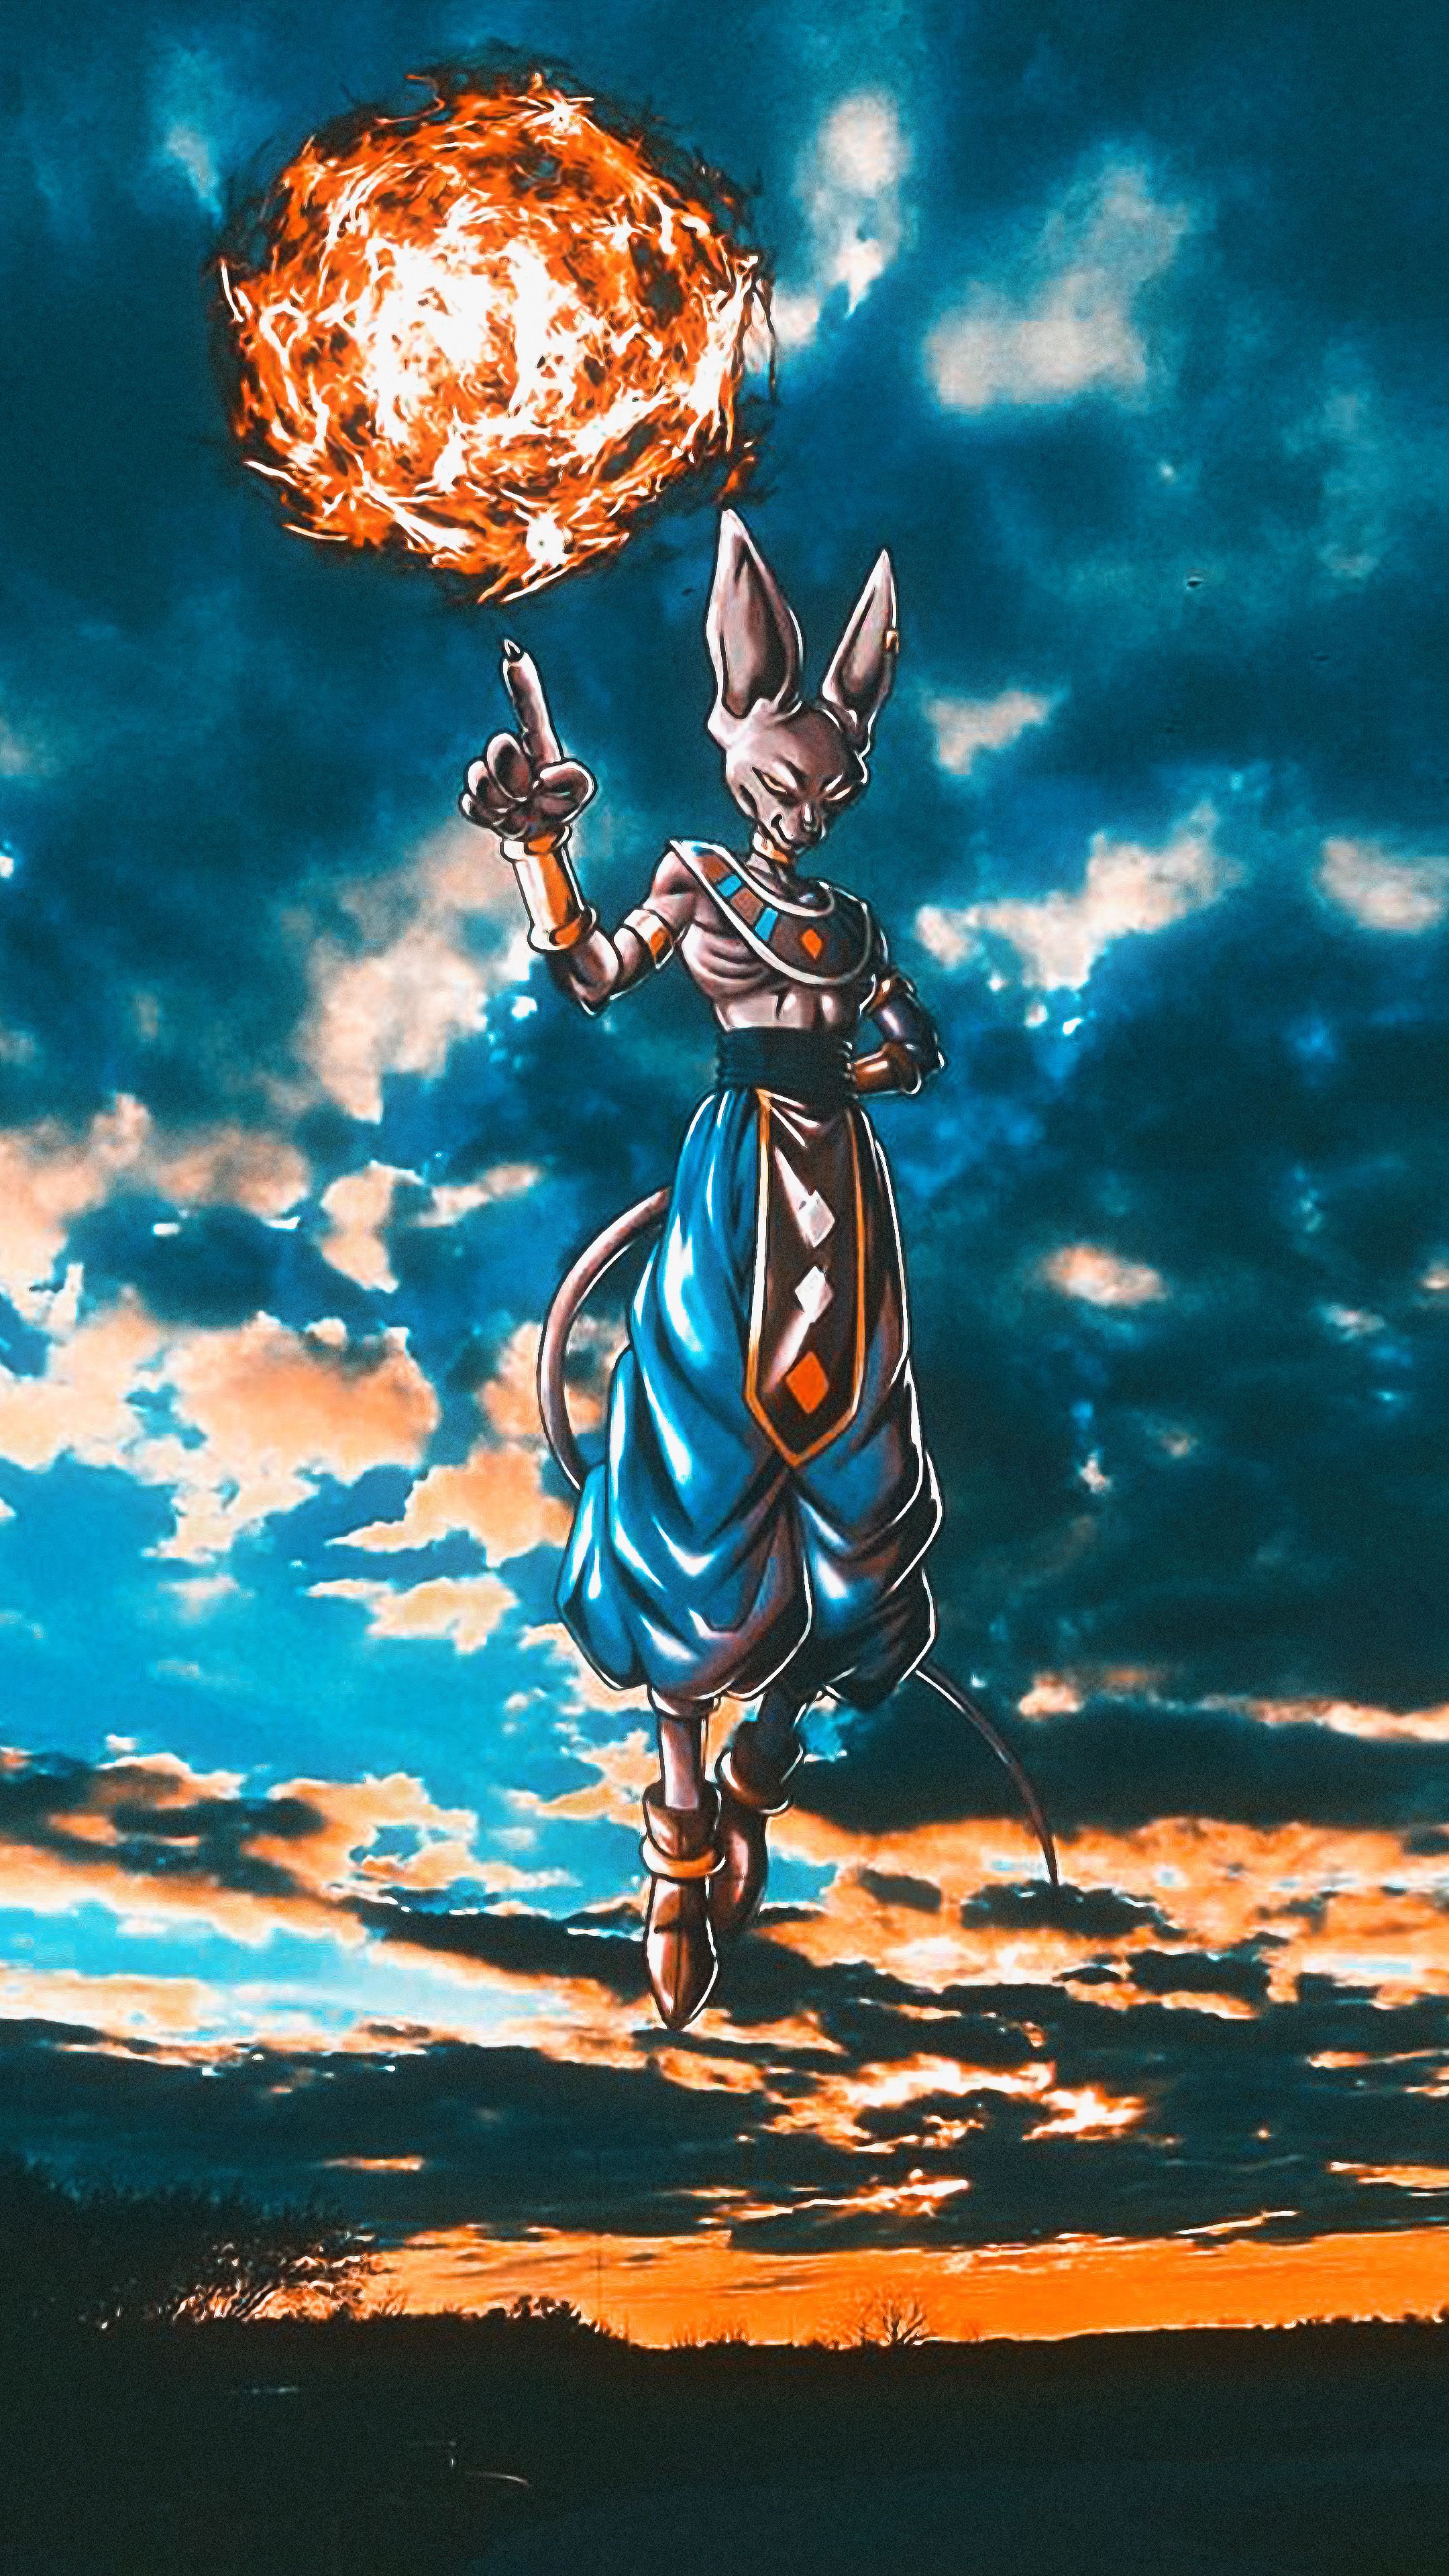 Super Saiyan God In Dragon Ball Super 4K Ultra HD Mobile Wallpaper